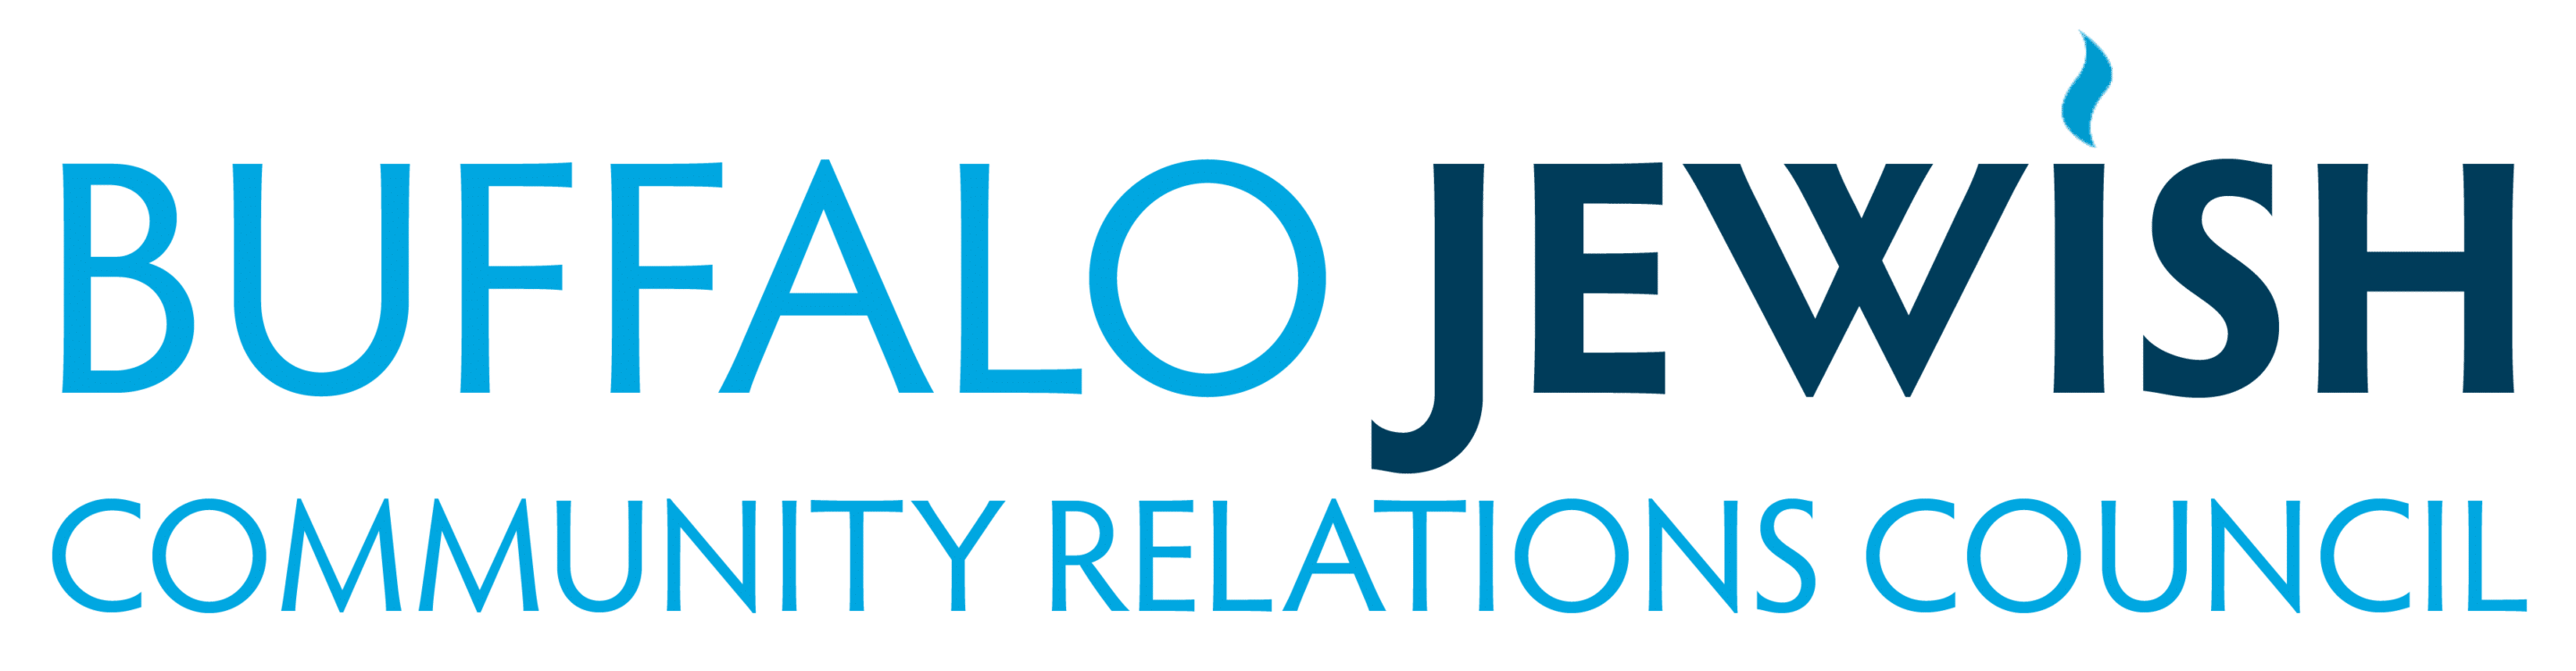 JCRC Engagement Intern - Buffalo JCRC Logo 1